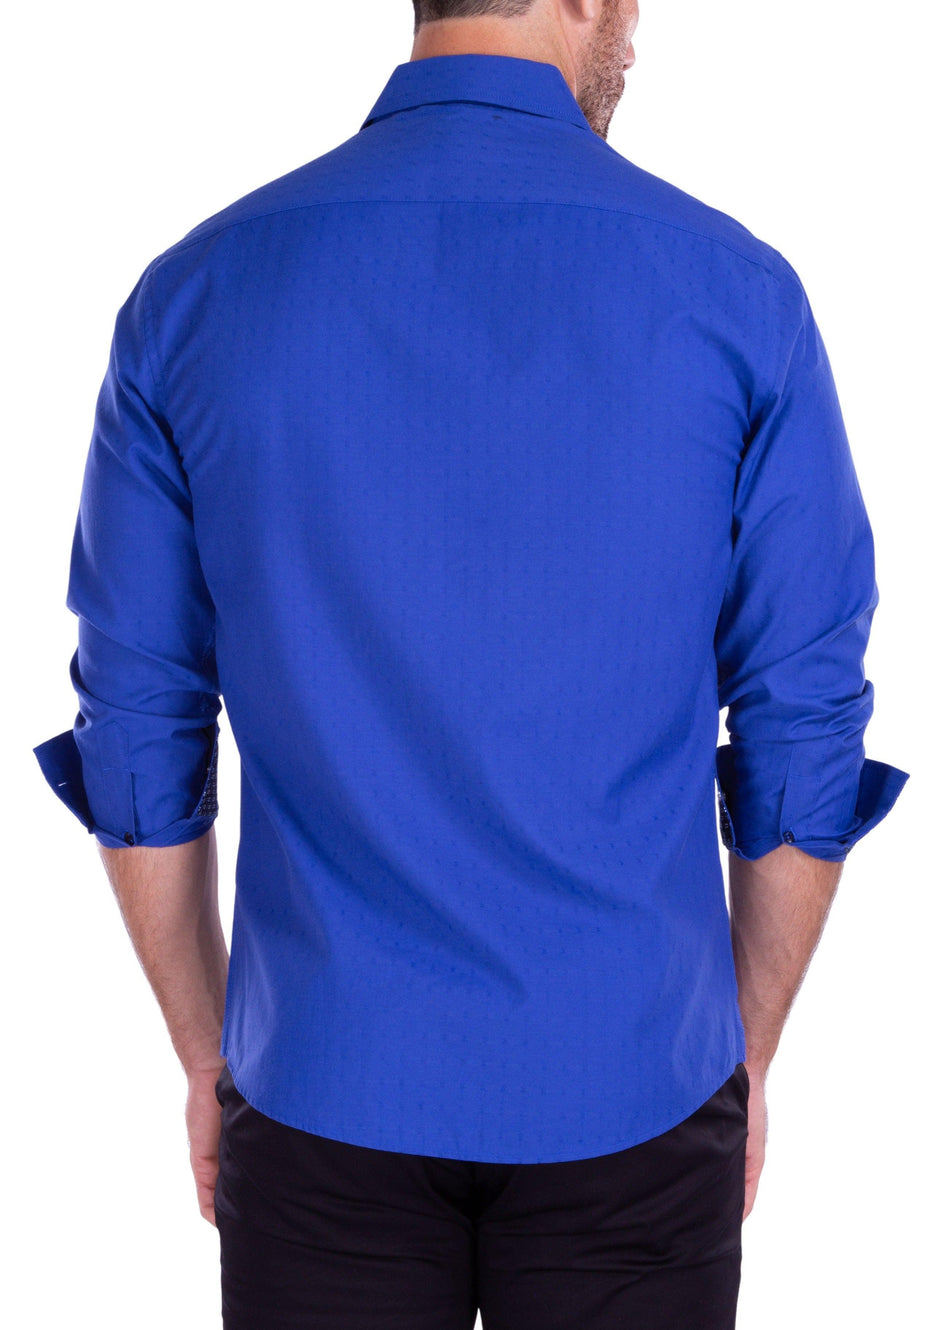 Men's Zipper Shirts Short Sleeve Casual Slim Fit Basic Polka Dot